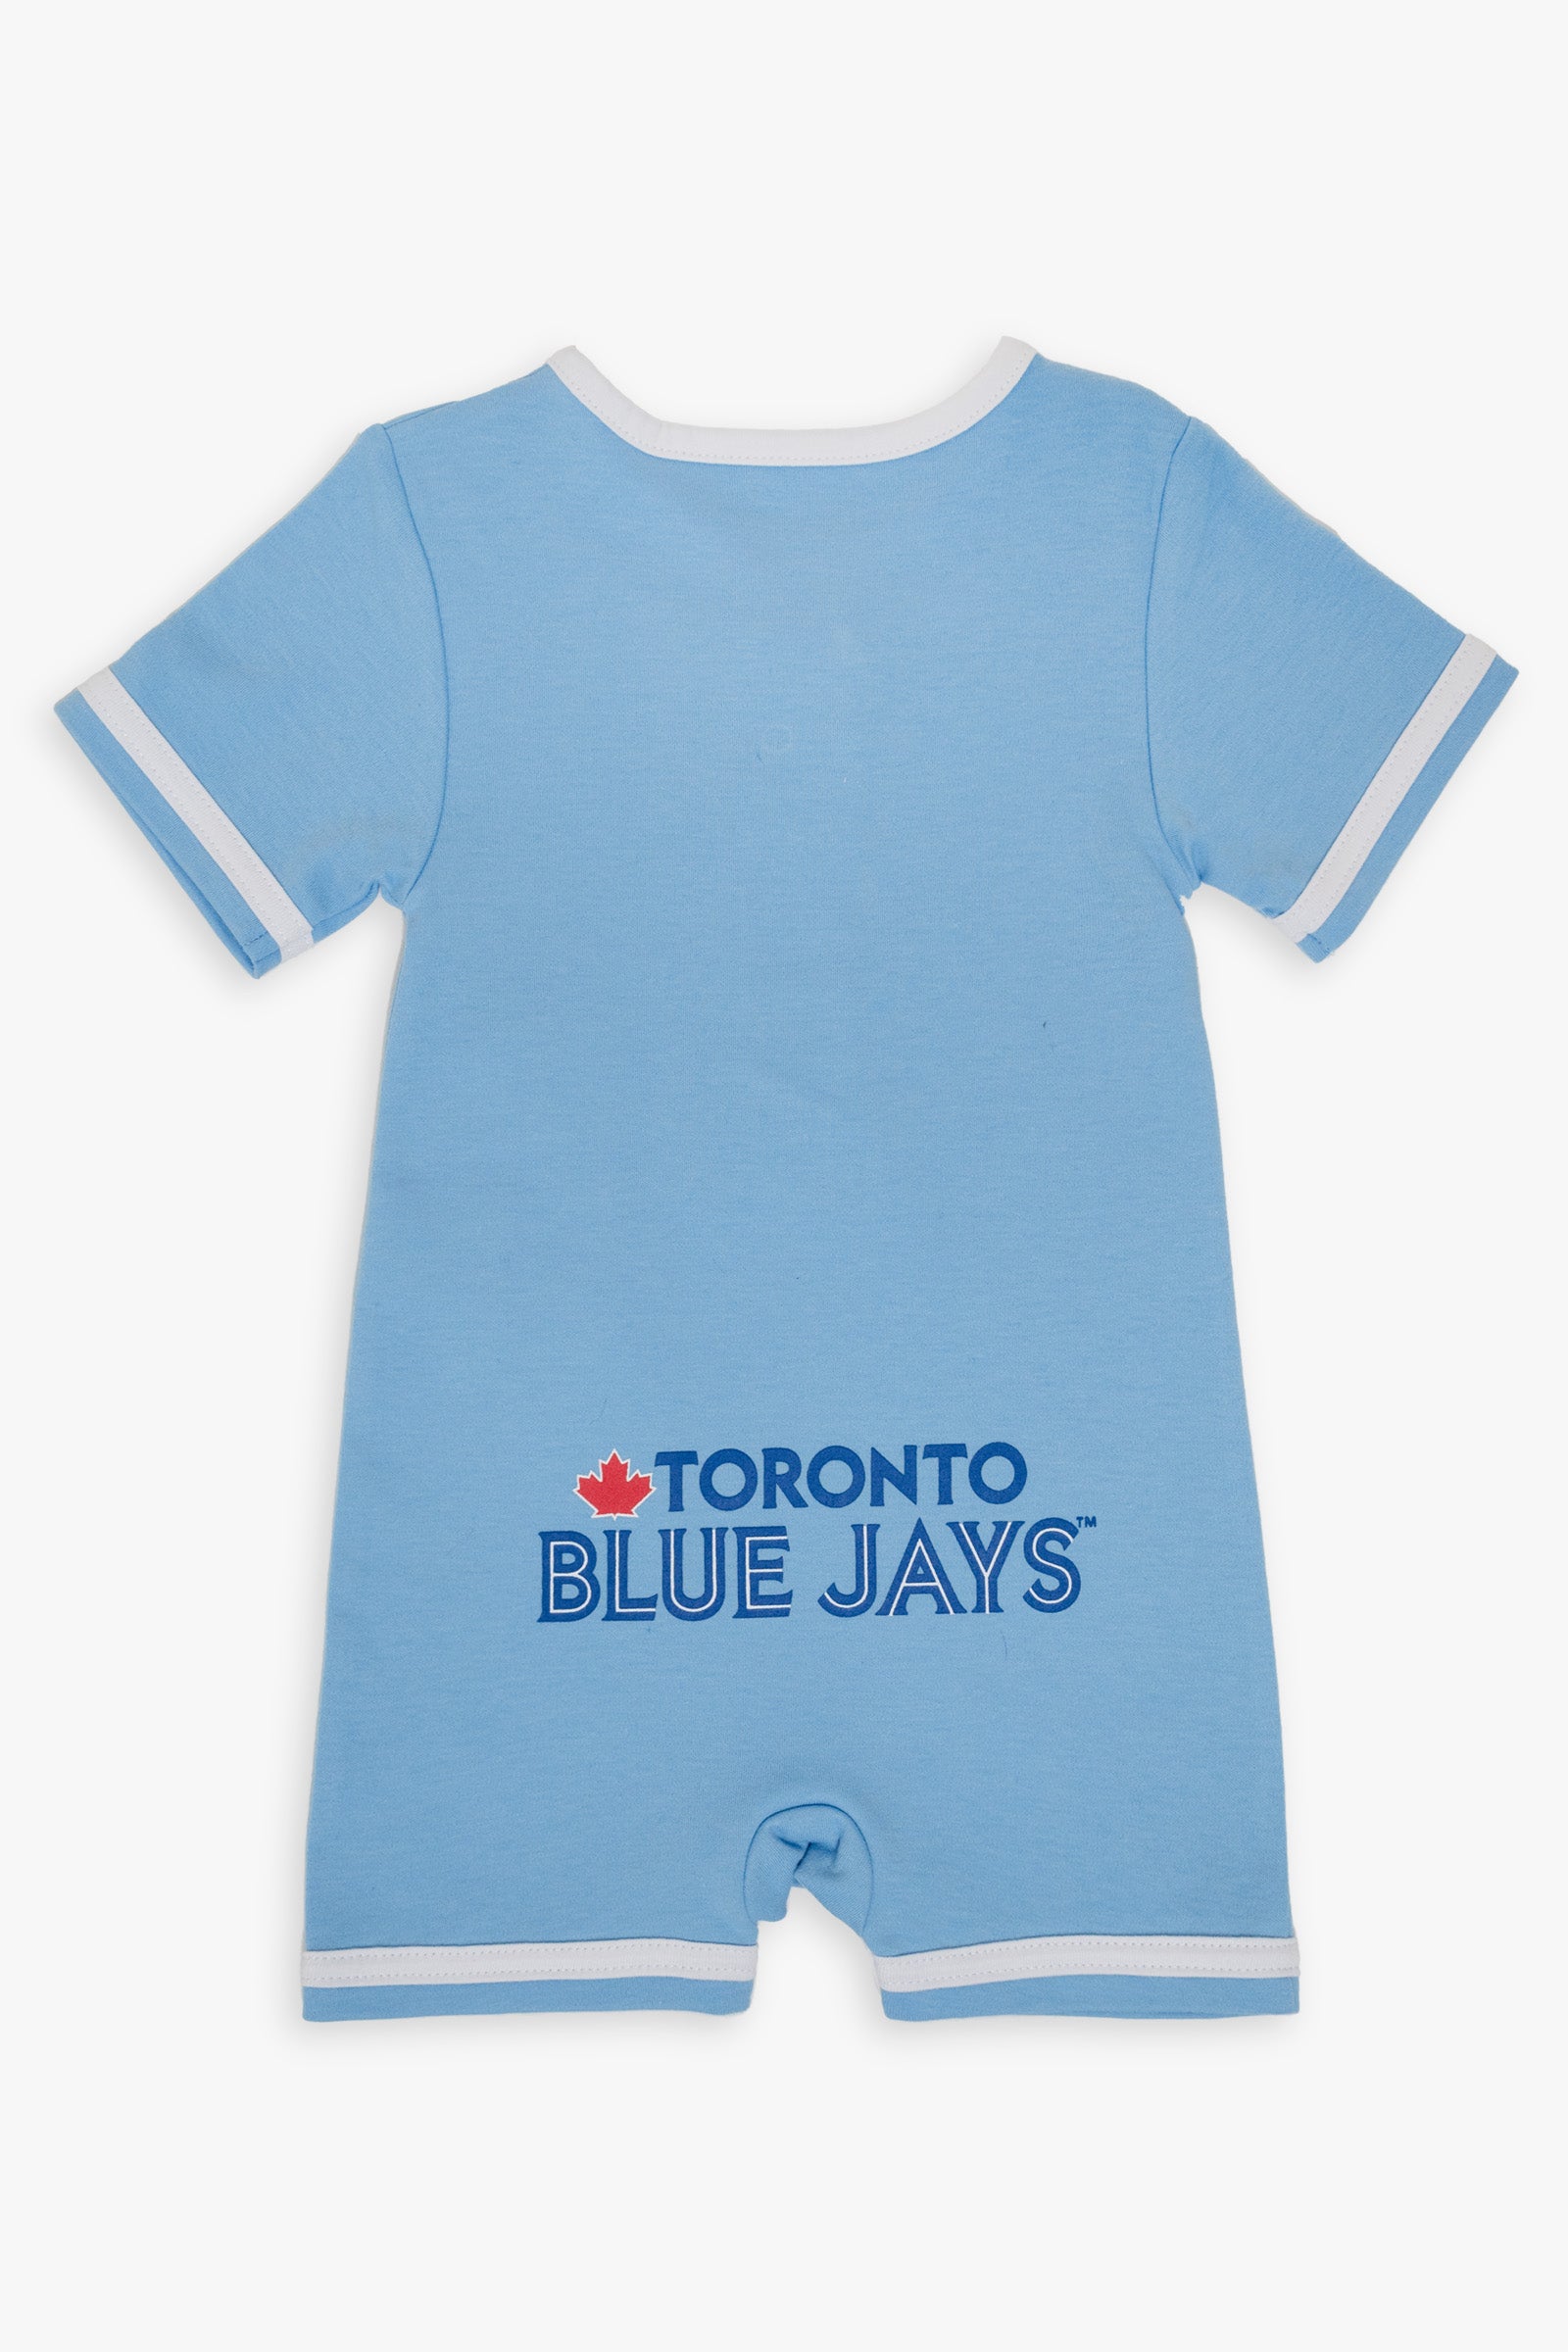 newborn blue jays clothing